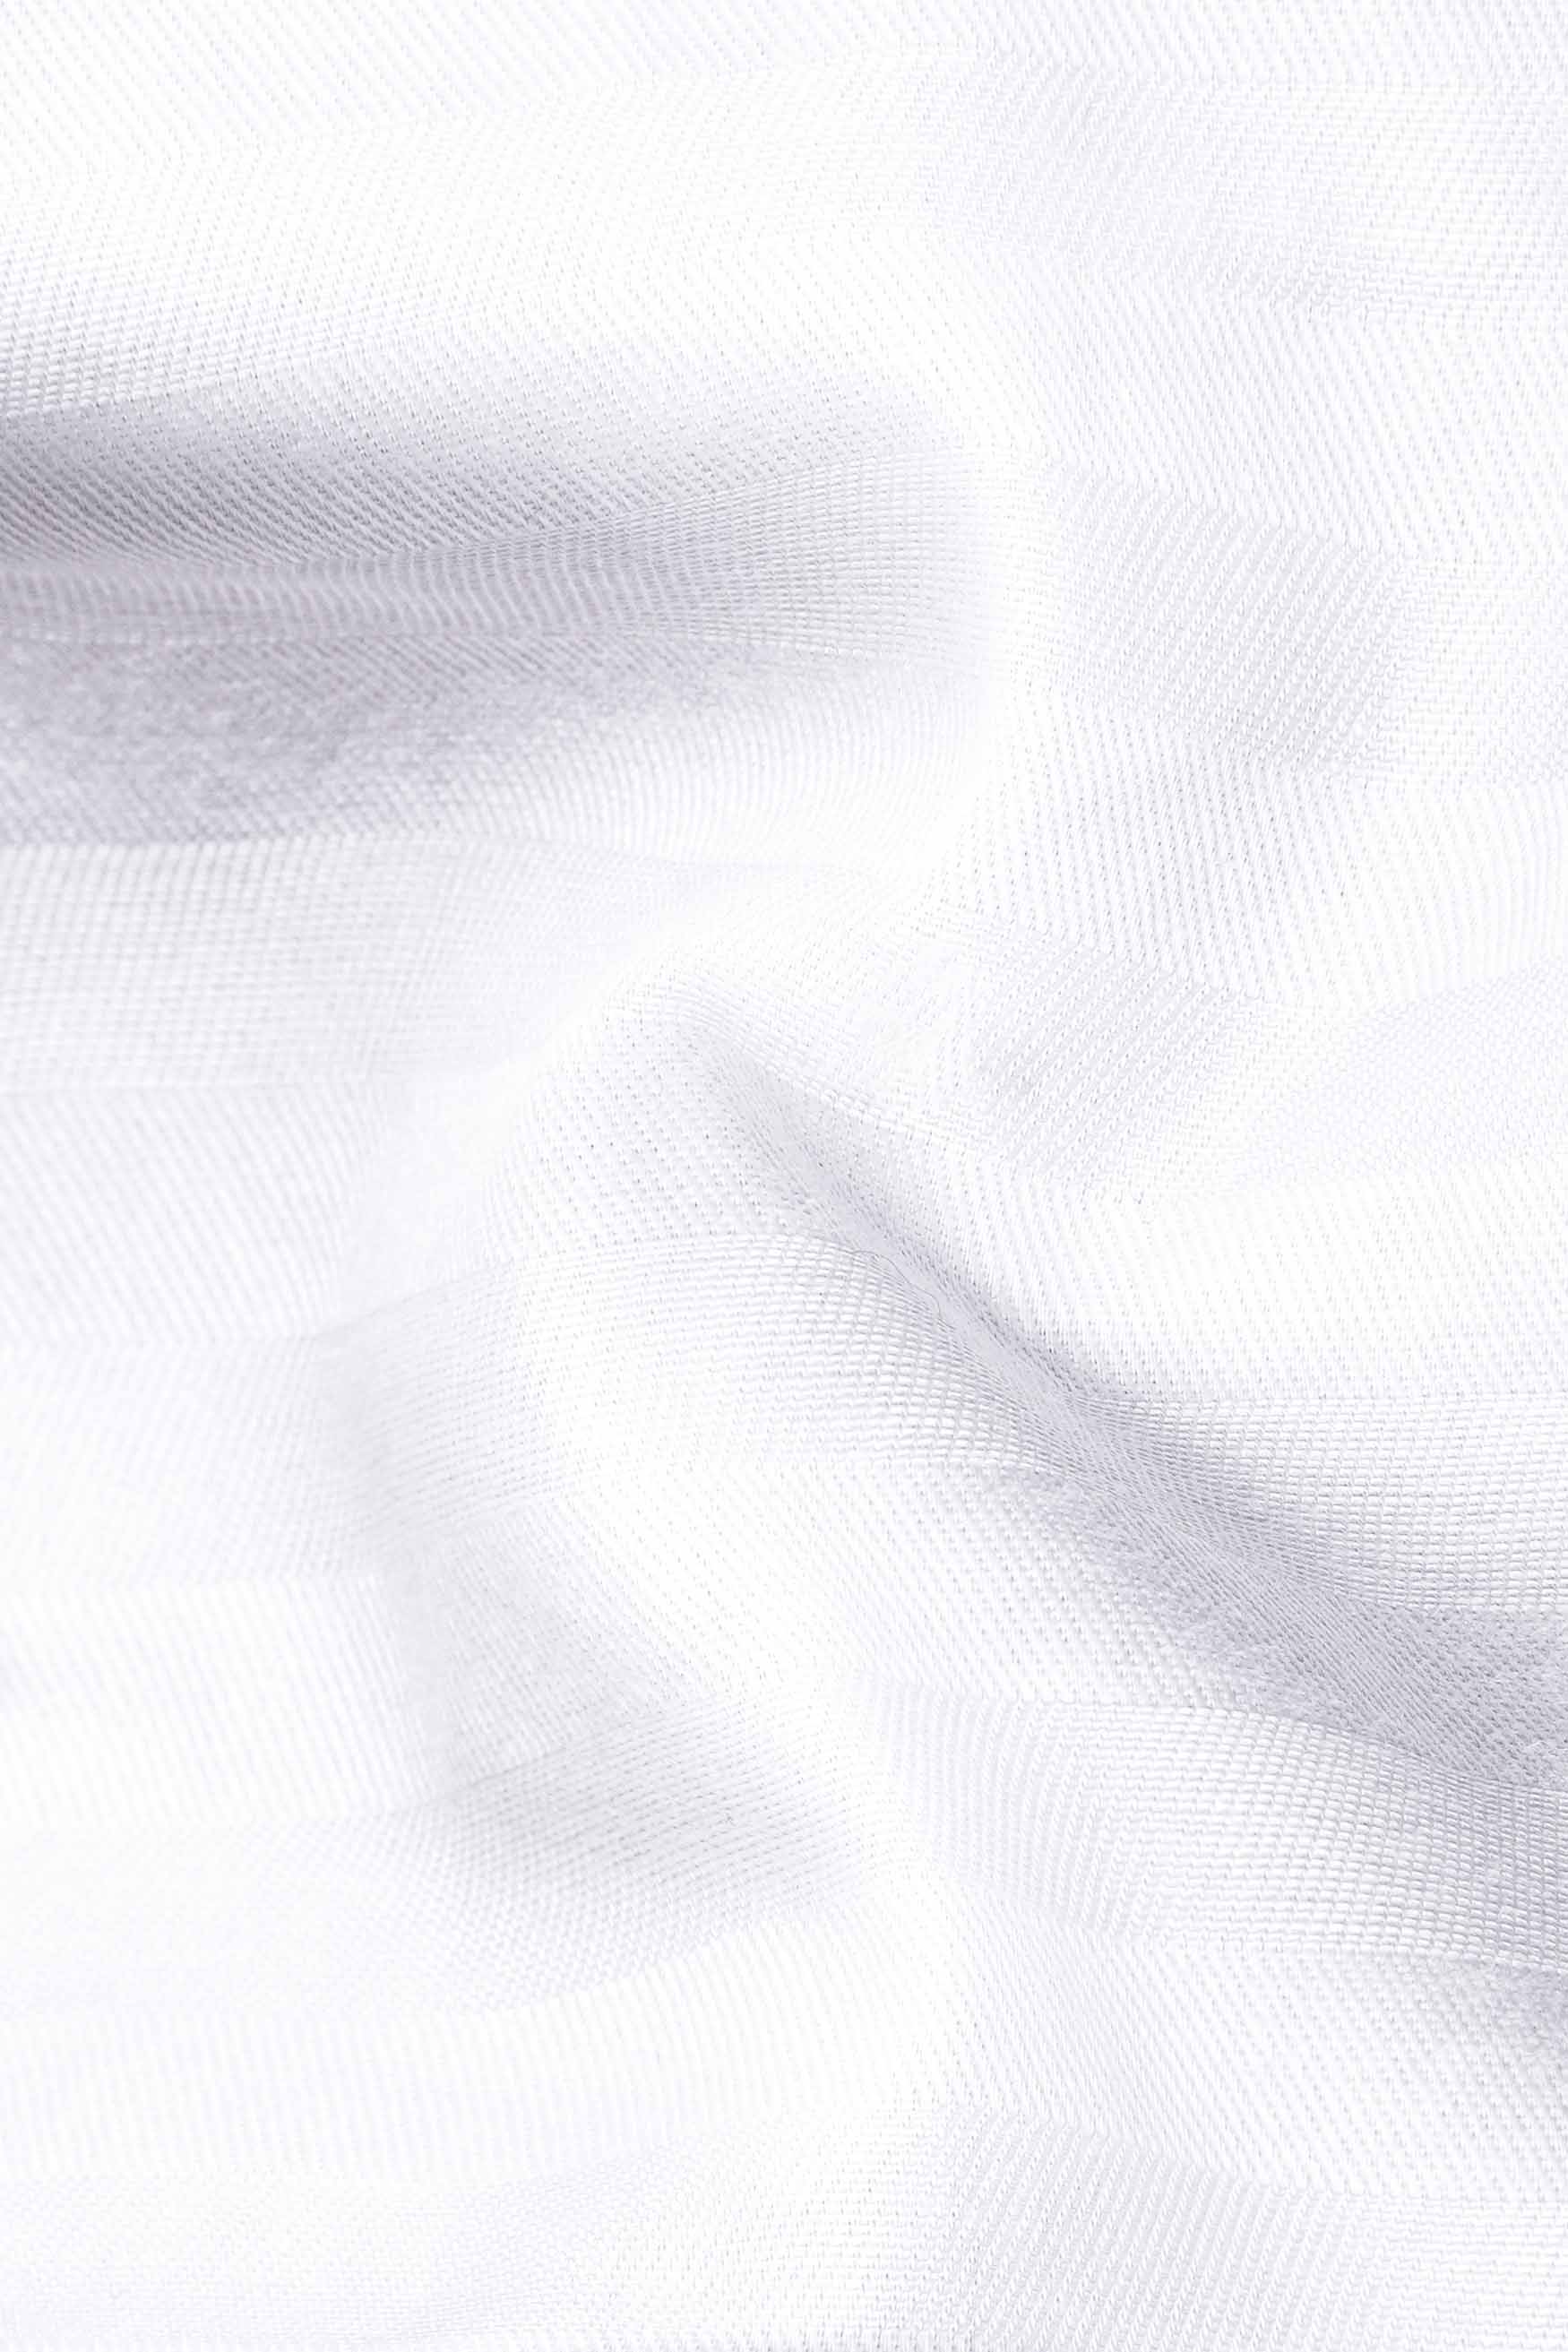 Bright White with Gainsboro Gray Striped Hand Painted Twill Premium Cotton Designer Shirt 6744-P140-ART-38, 6744-P140-ART-H-38, 6744-P140-ART-39, 6744-P140-ART-H-39, 6744-P140-ART-40, 6744-P140-ART-H-40, 6744-P140-ART-42, 6744-P140-ART-H-42, 6744-P140-ART-44, 6744-P140-ART-H-44, 6744-P140-ART-46, 6744-P140-ART-H-46, 6744-P140-ART-48, 6744-P140-ART-H-48, 6744-P140-ART-50, 6744-P140-ART-H-50, 6744-P140-ART-52, 6744-P140-ART-H-52